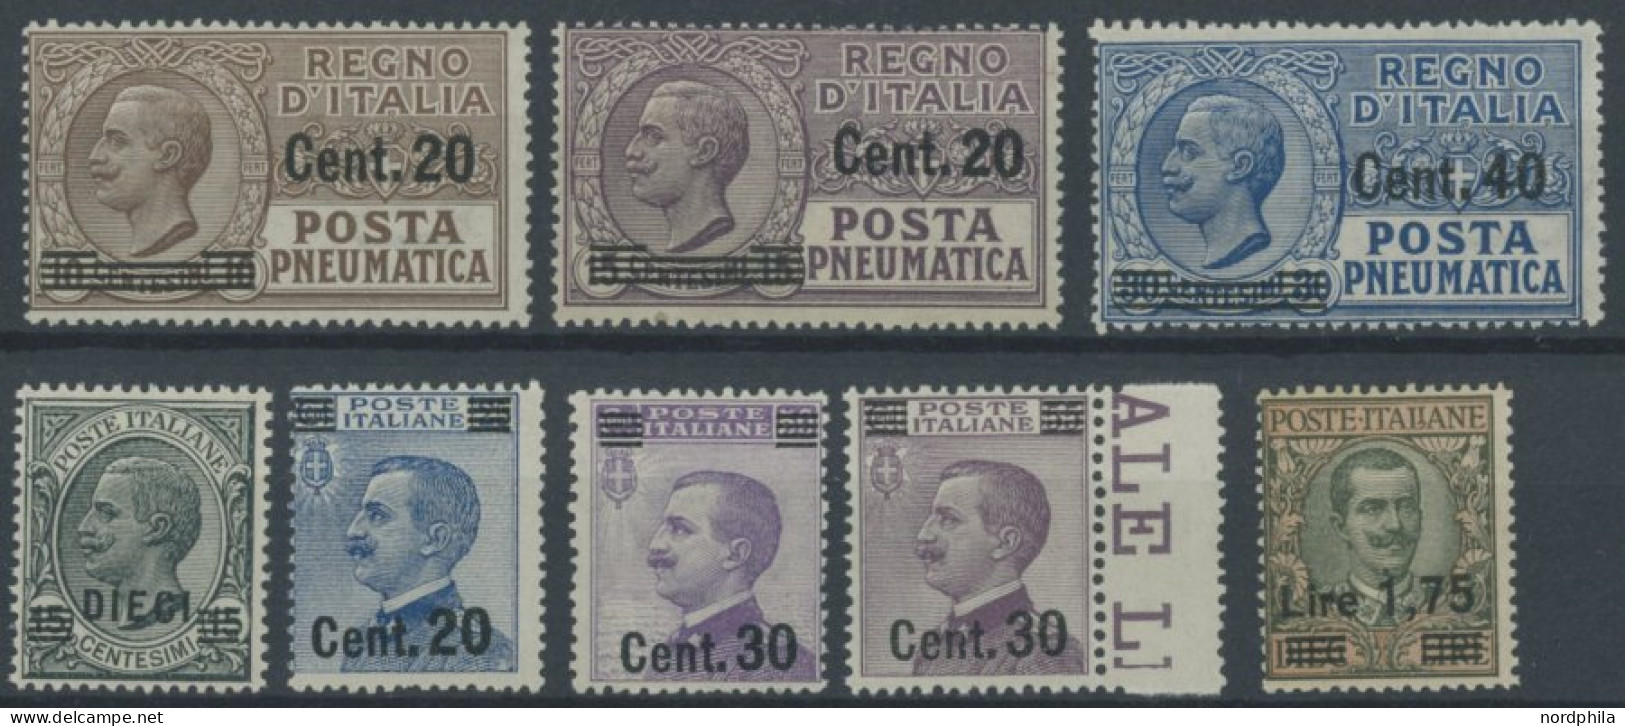 ITALIEN 214-21 , 1925, Rohrpostmarken Und König Emanuel III, 2 Postfrische Prachtsätze, Mi. 76.- - Unclassified